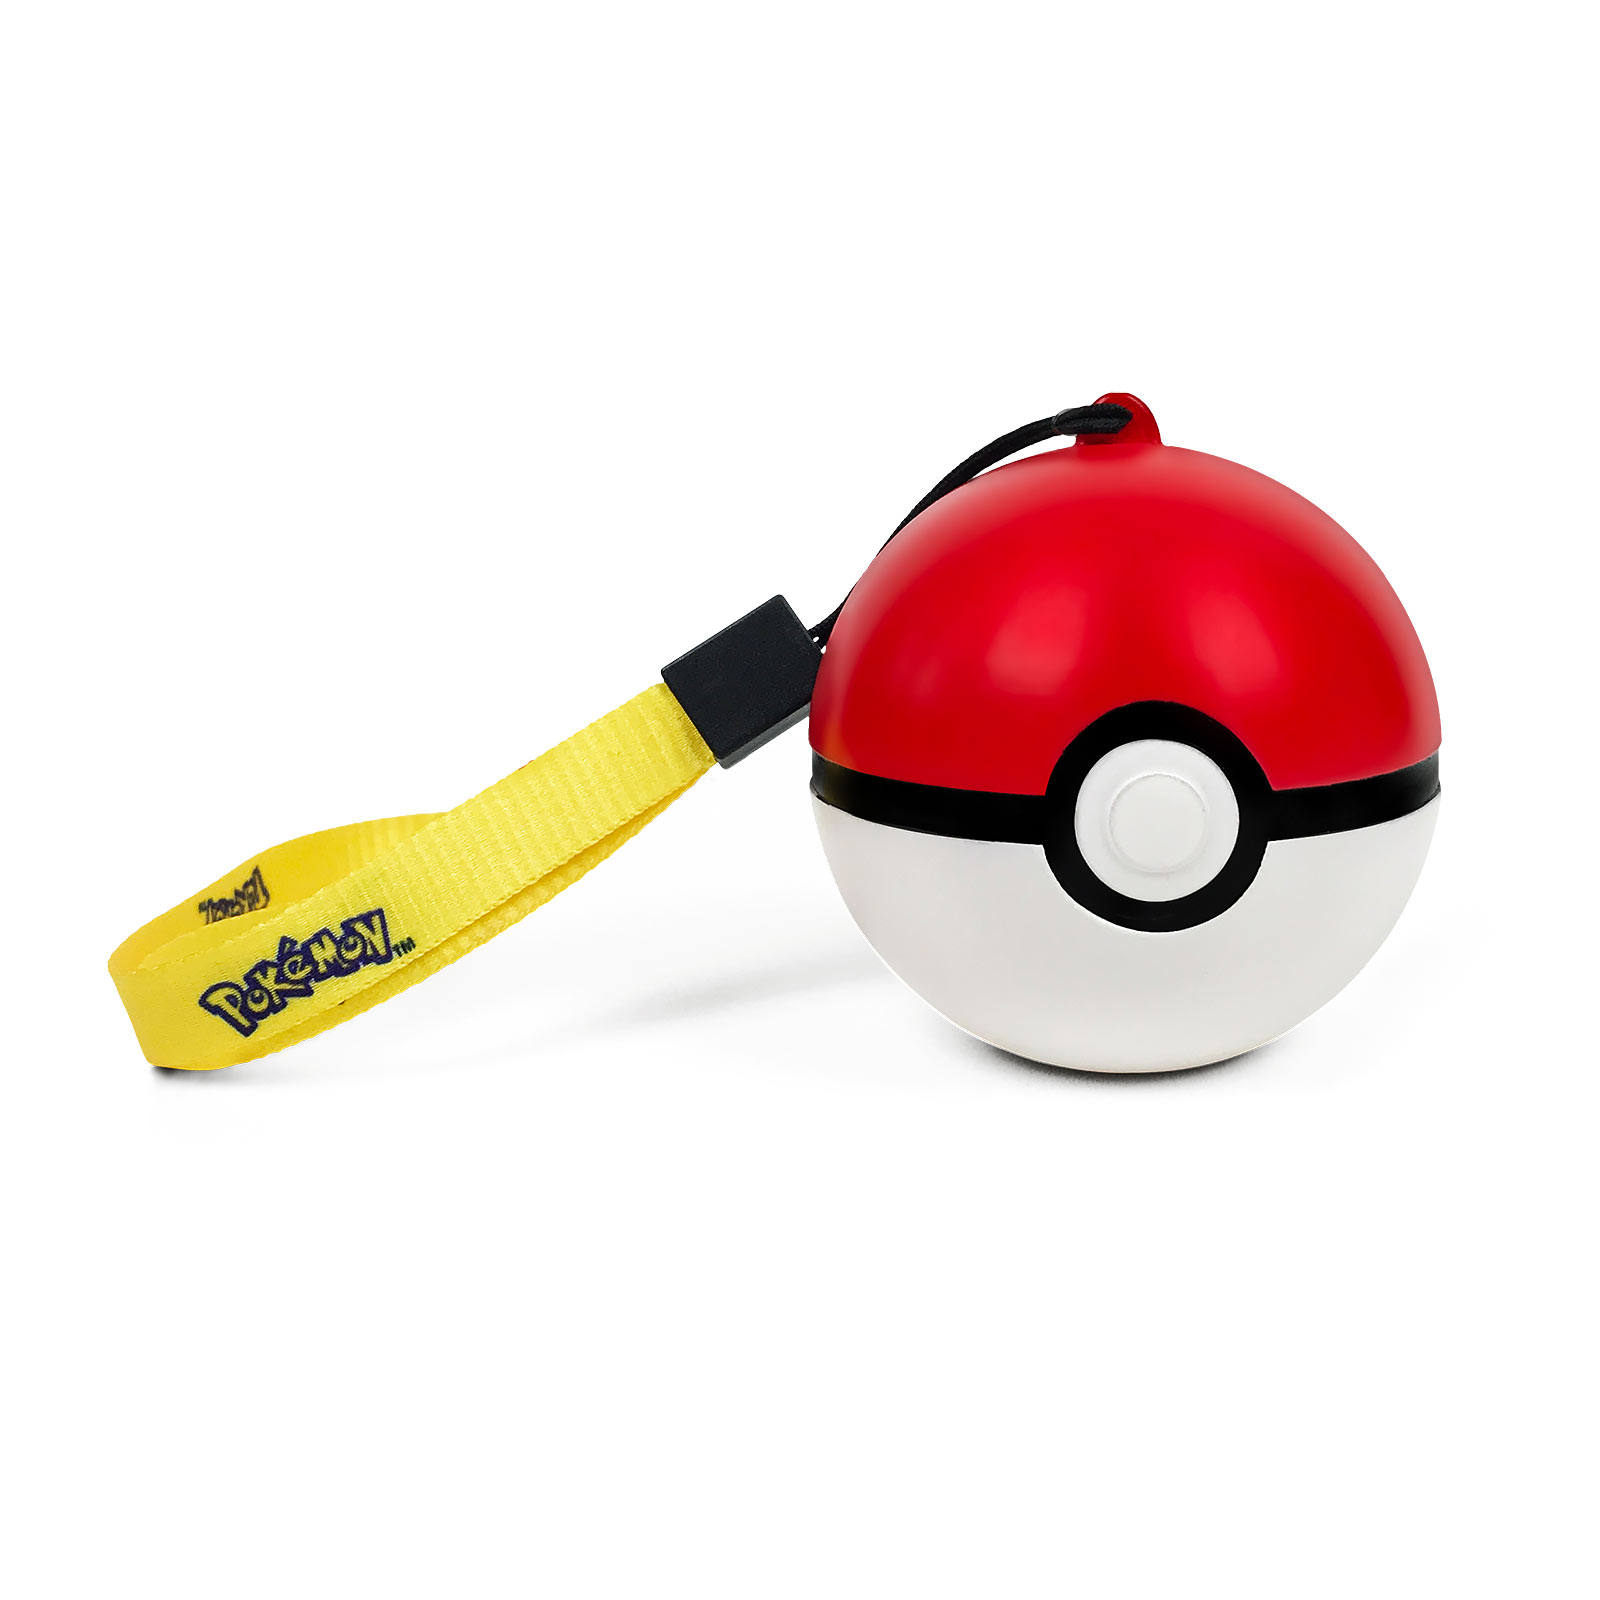 Pokemon - LED Pokeball with Wrist Strap